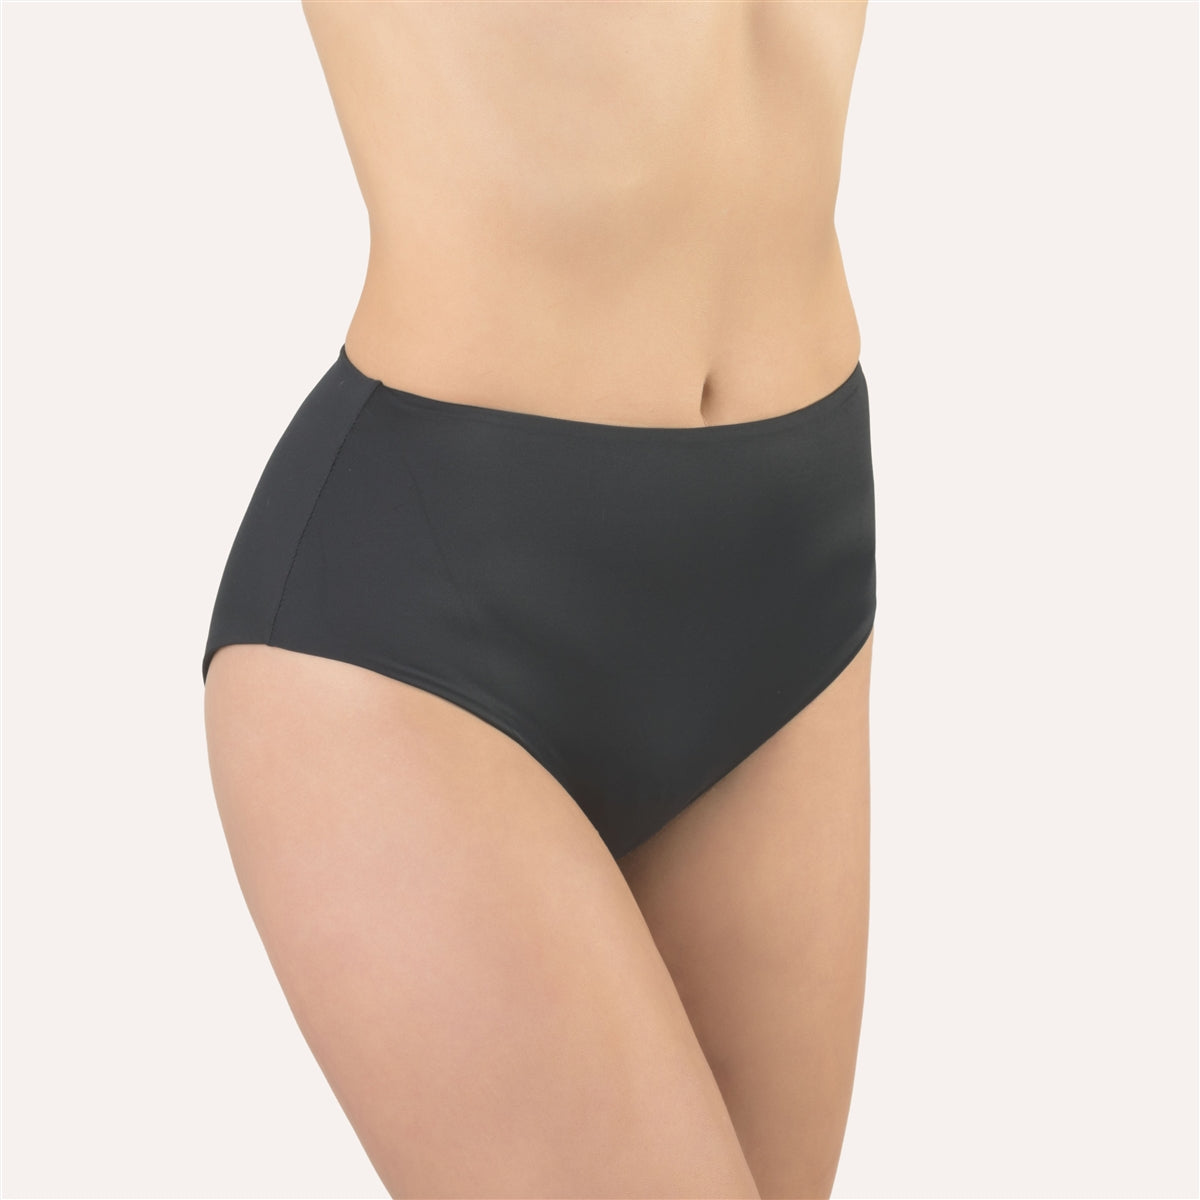 Good quality black high waist brief made from super soft microfibre fabric